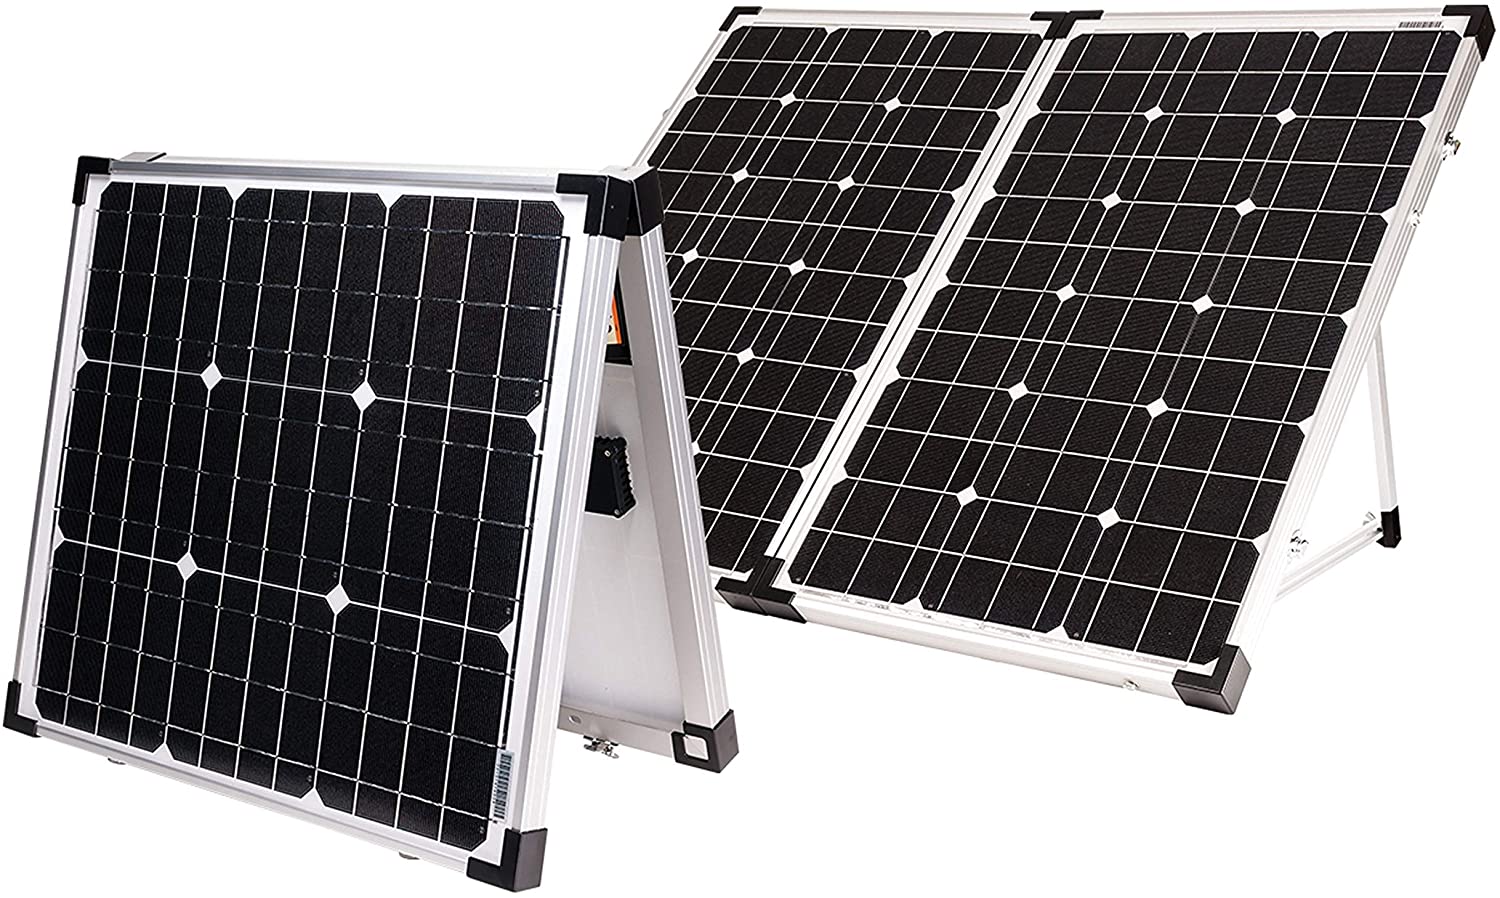  Go Power! GP-PSK-130 130W Portable Folding Solar Kit with 10 Amp Solar Controller